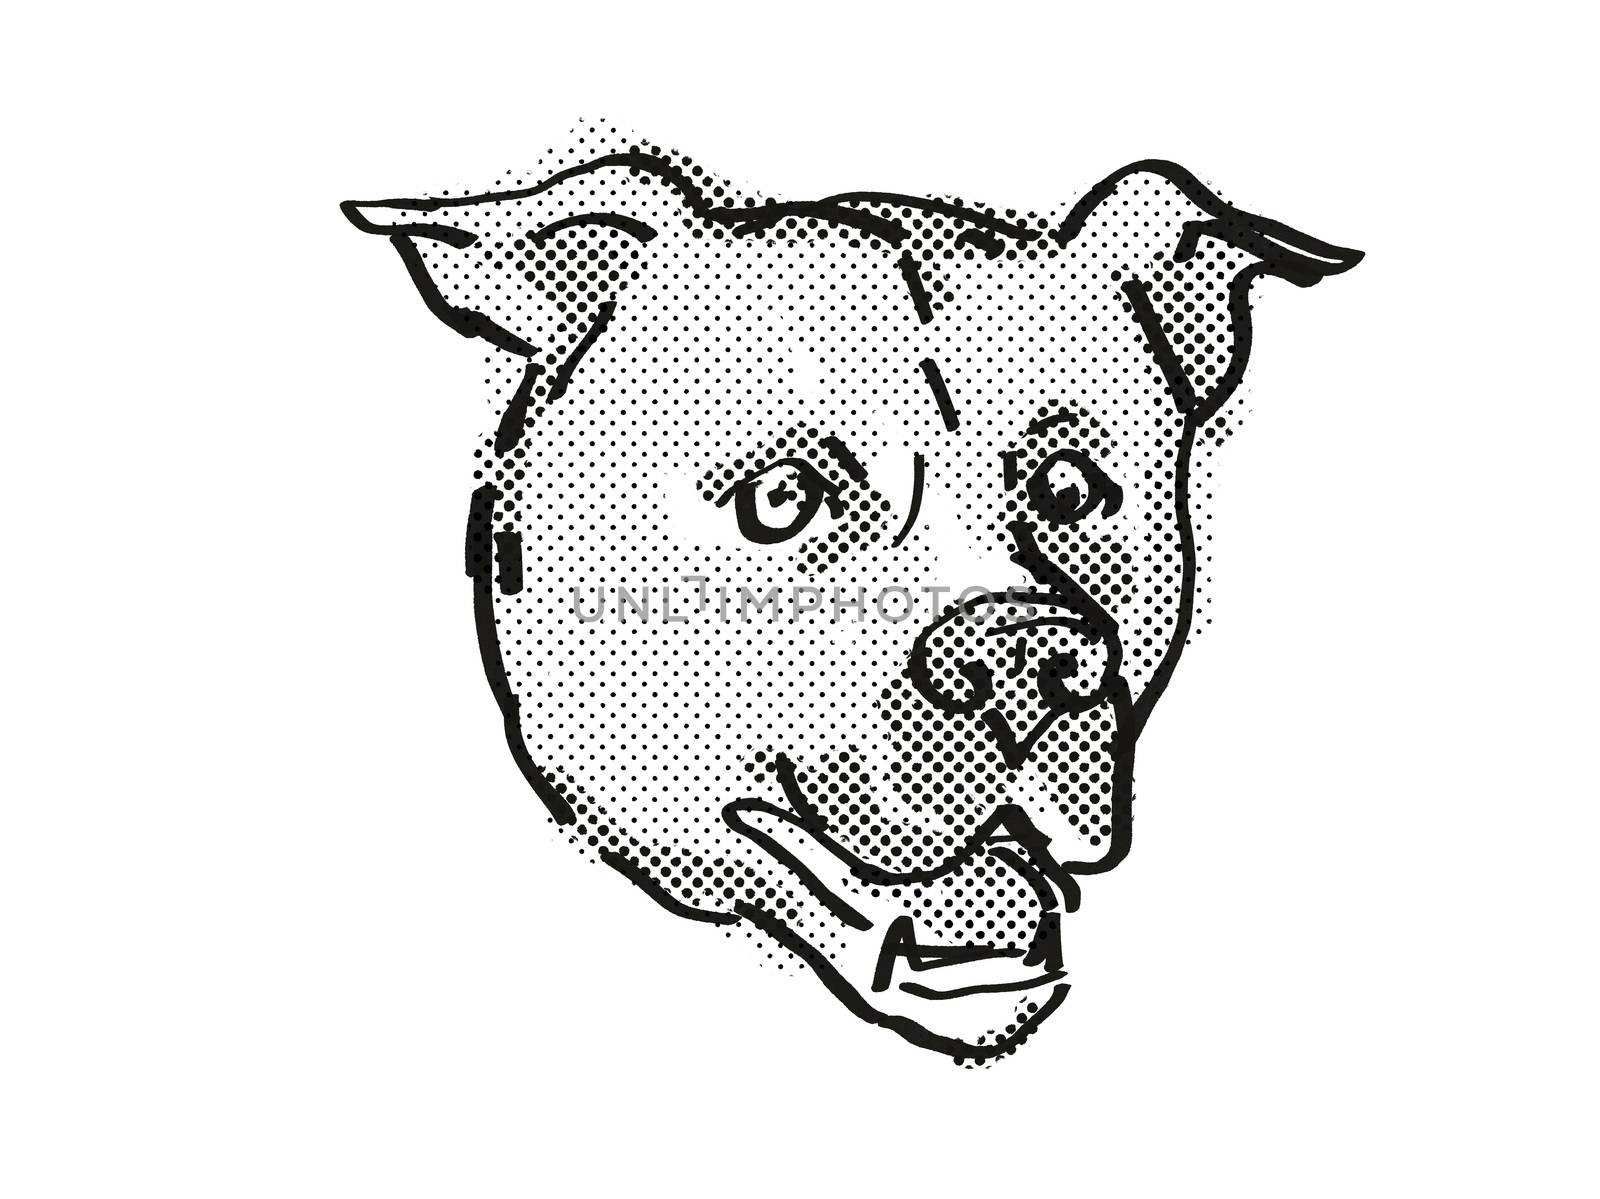 American Staffordshire Terrier Dog Breed Cartoon Retro Drawing by patrimonio